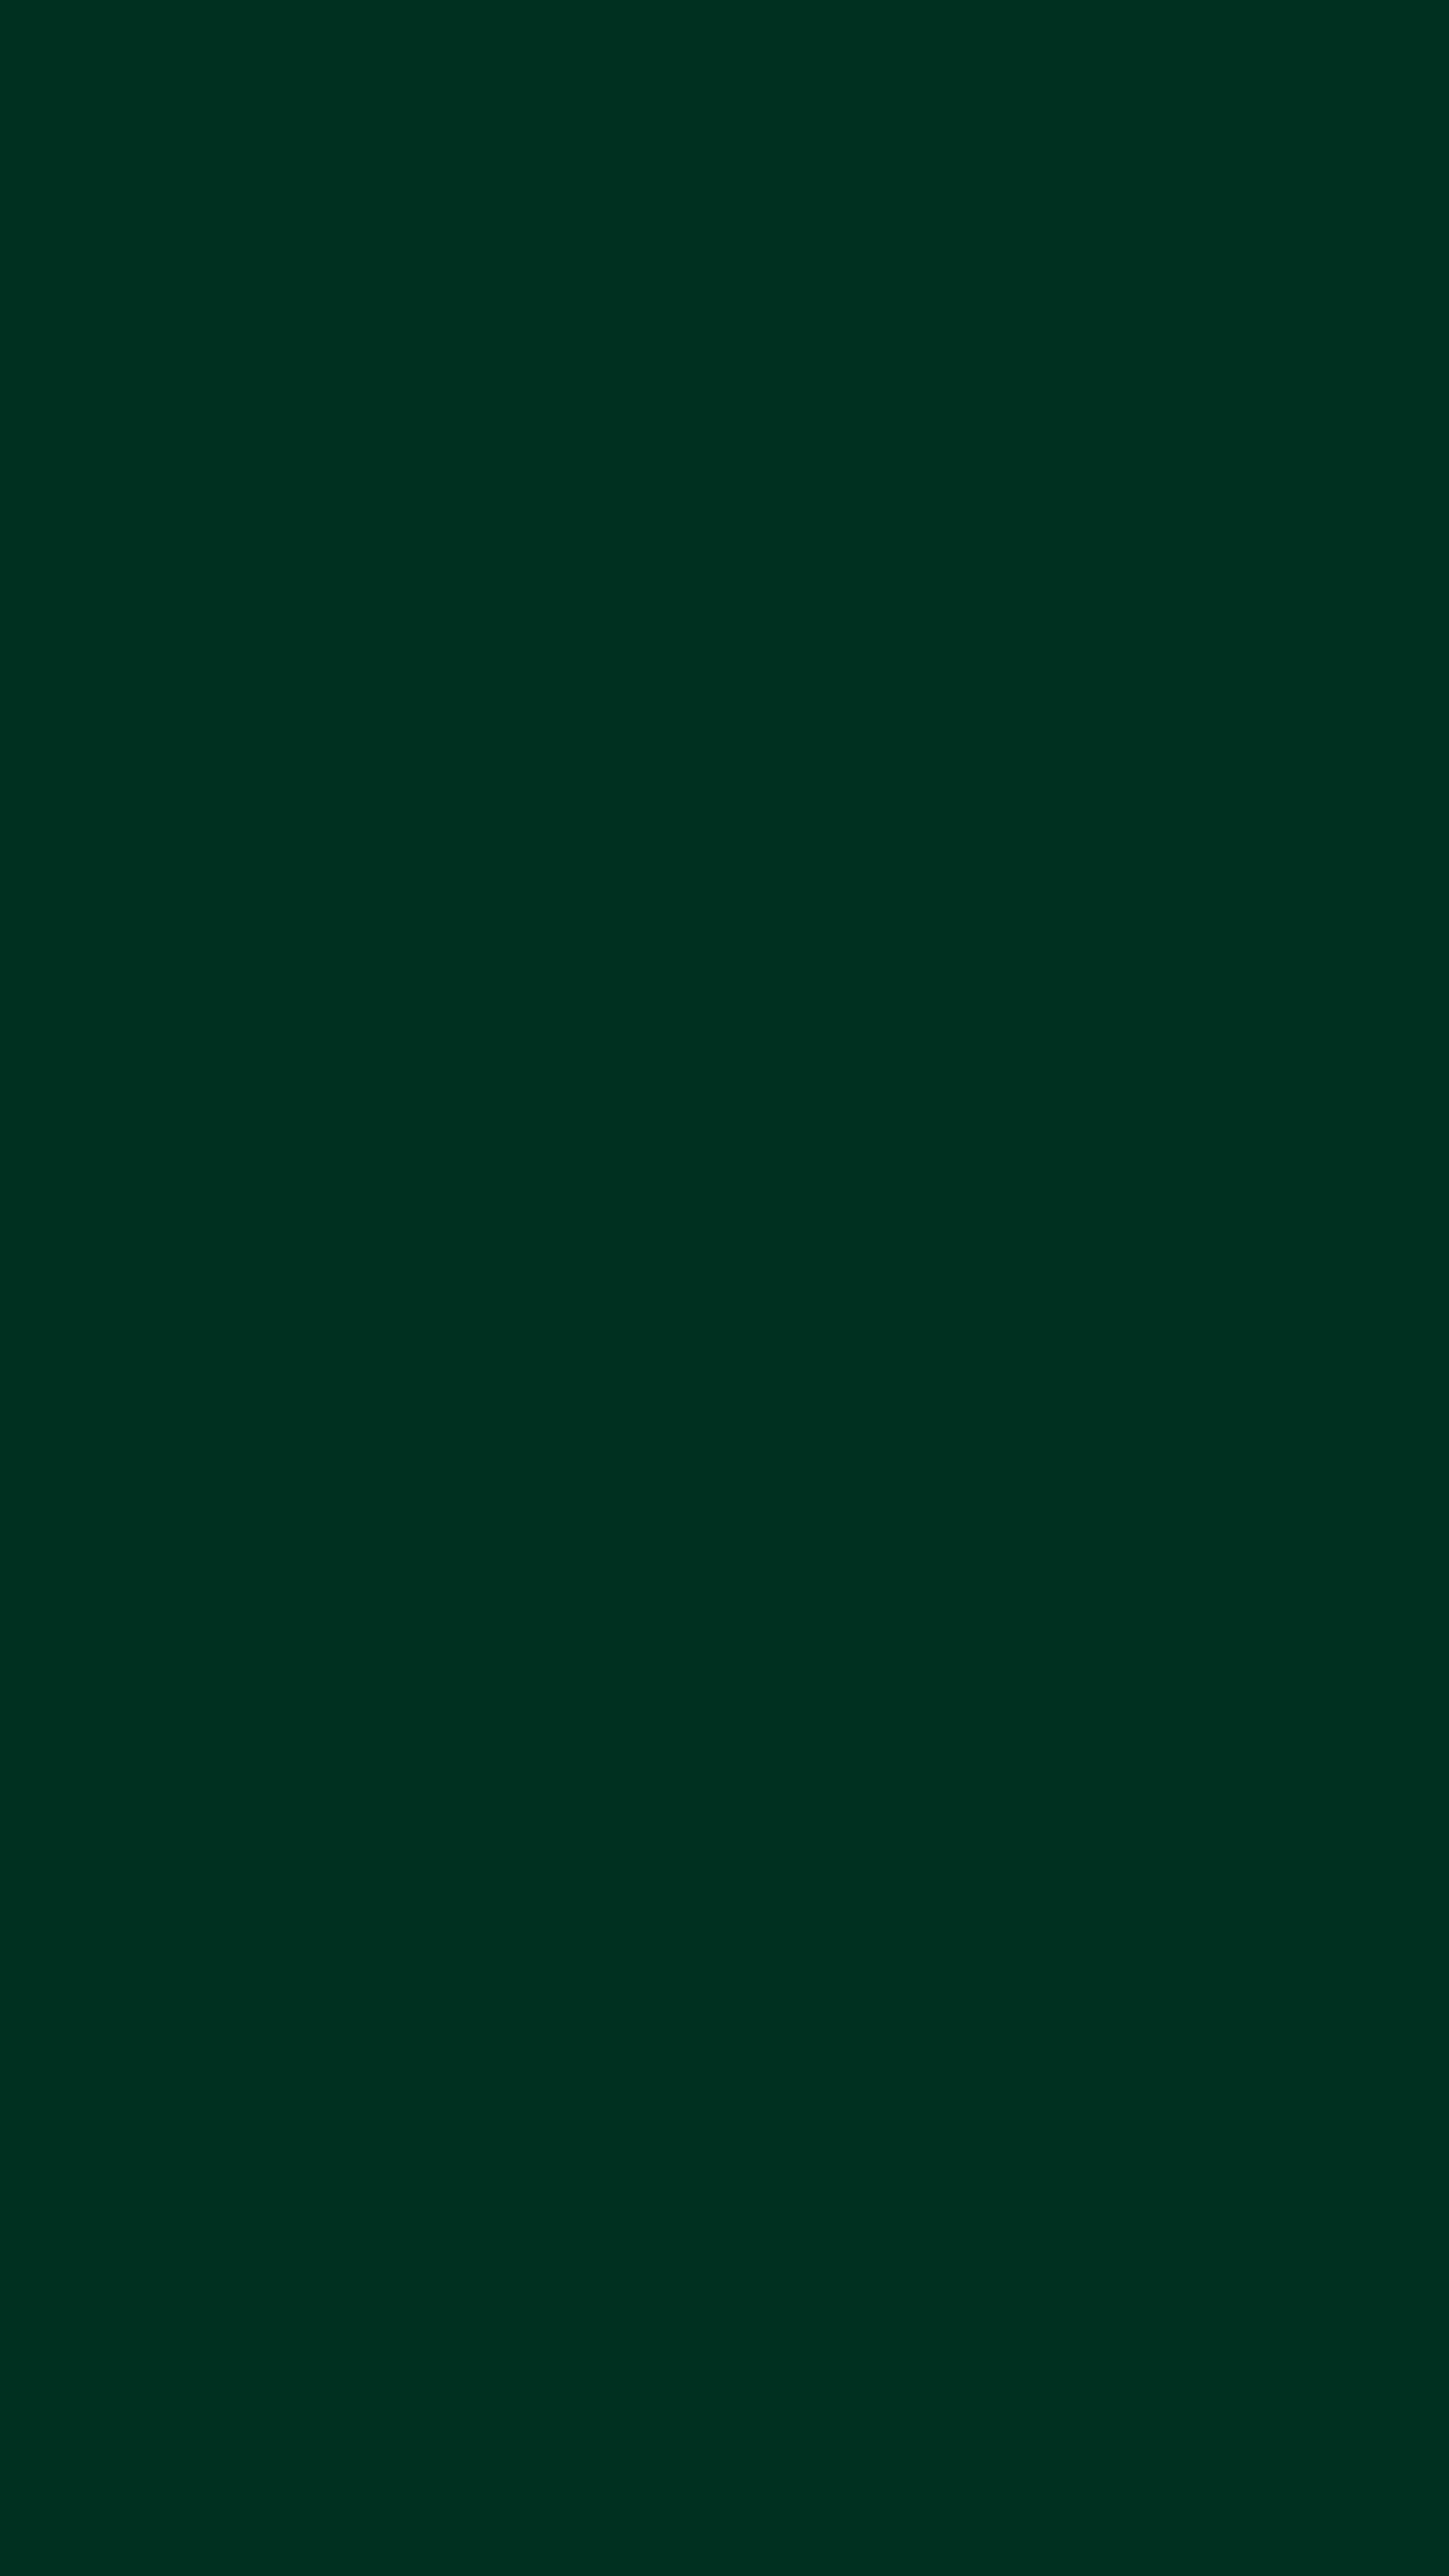 Dark Green Solid Color Background .fonewalls.com